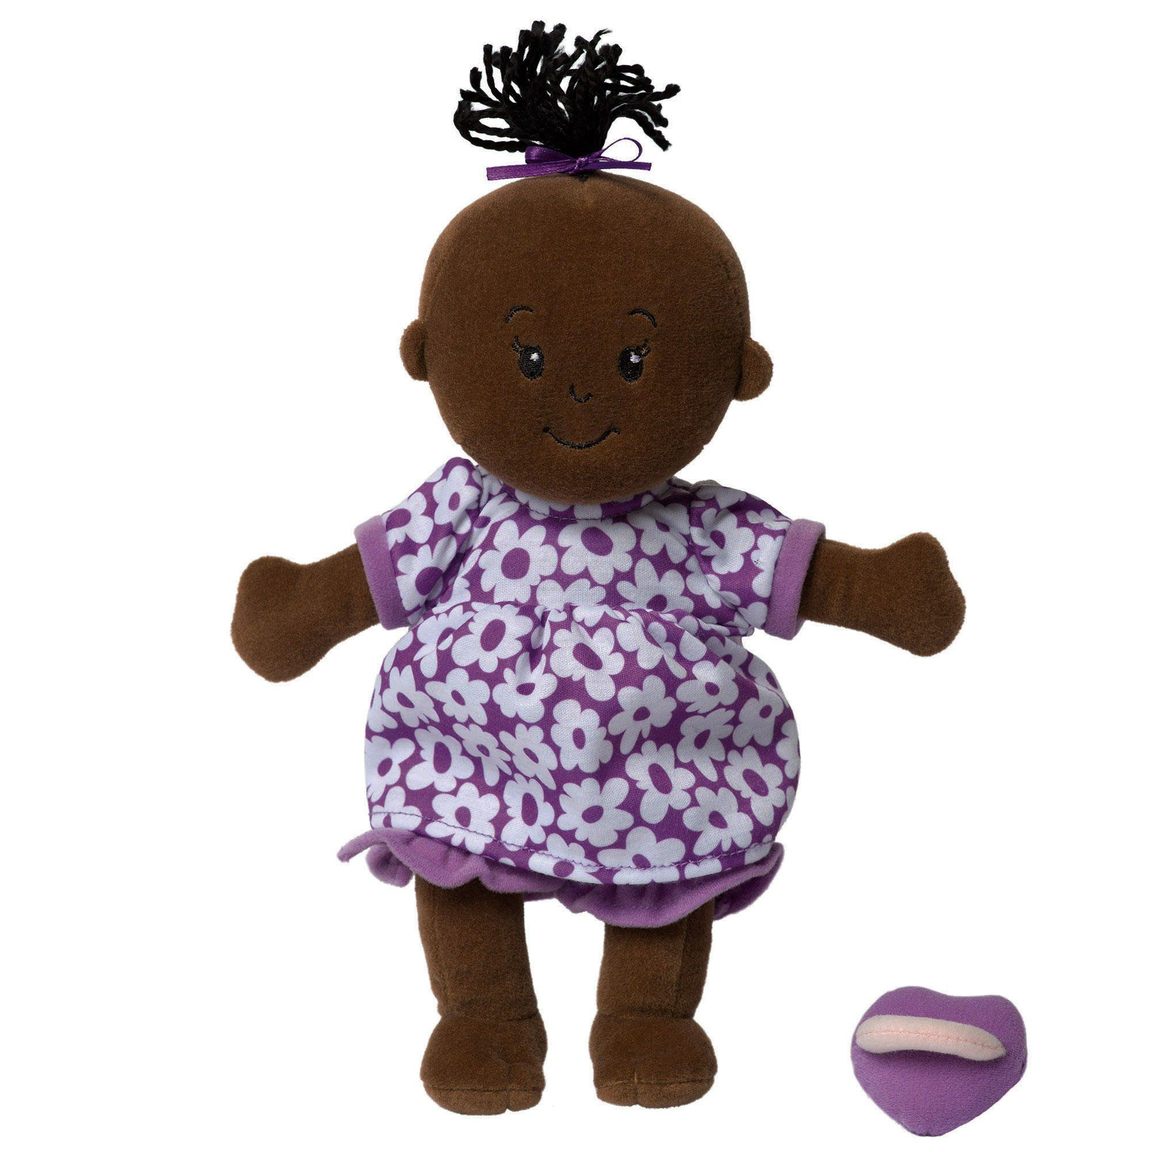 Wee Baby Stella Brown 12" Soft Doll